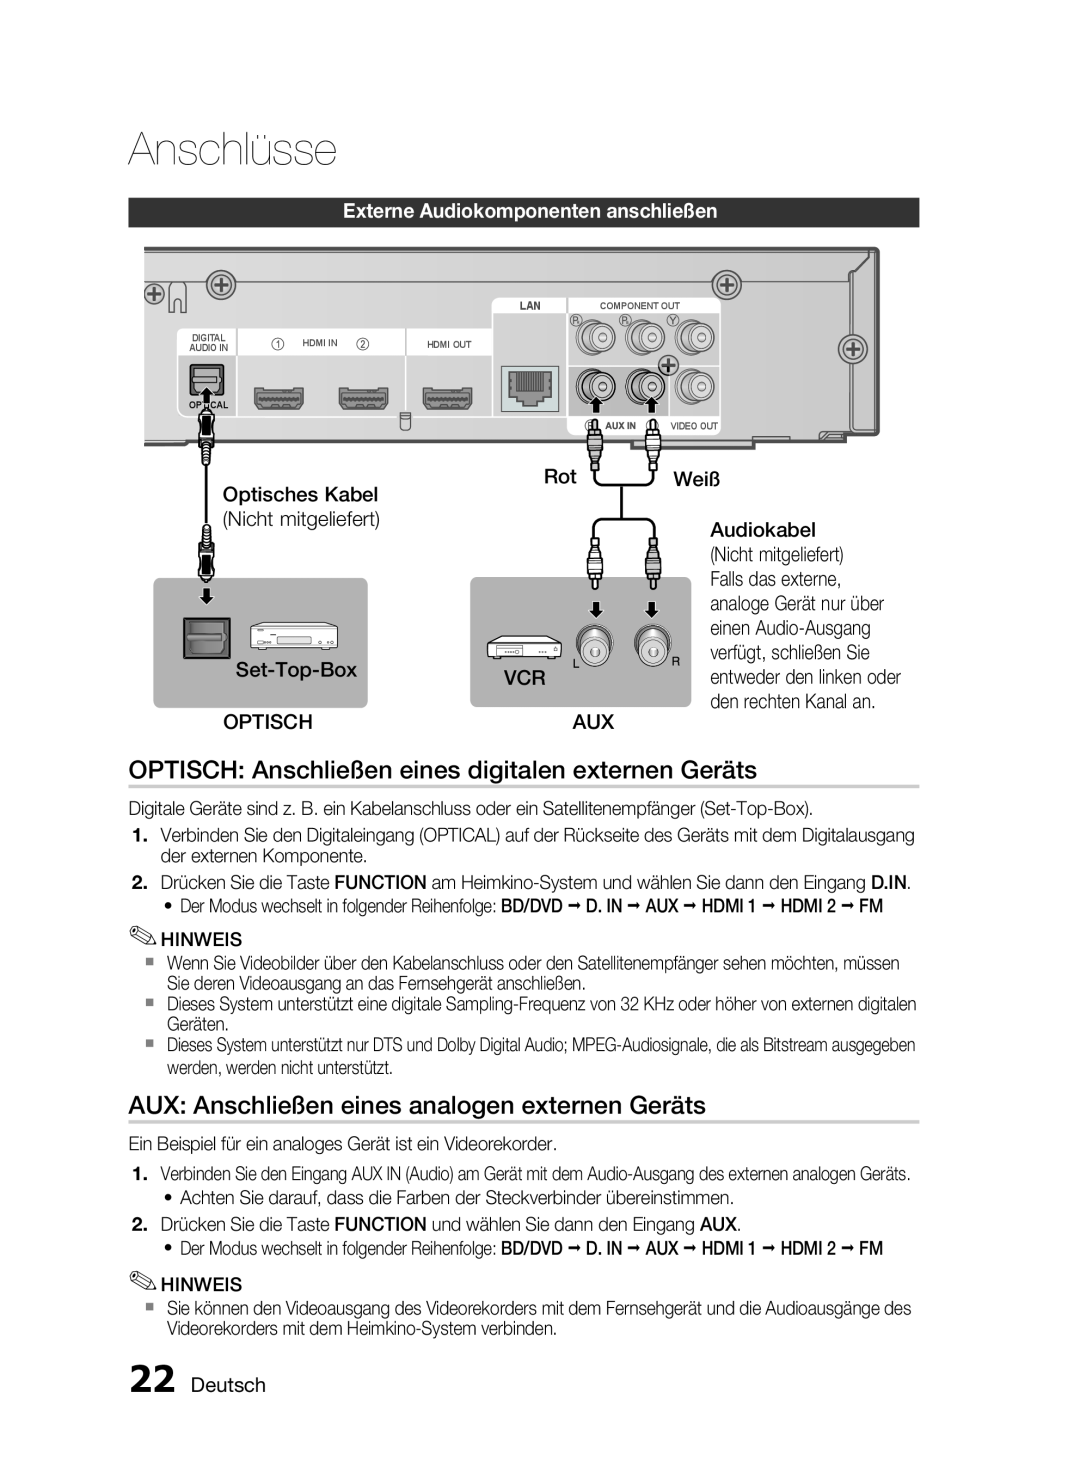 Samsung HT-C6200/EDC OPTISCH Anschließen eines digitalen externen Geräts, AUX Anschließen eines analogen externen Geräts 